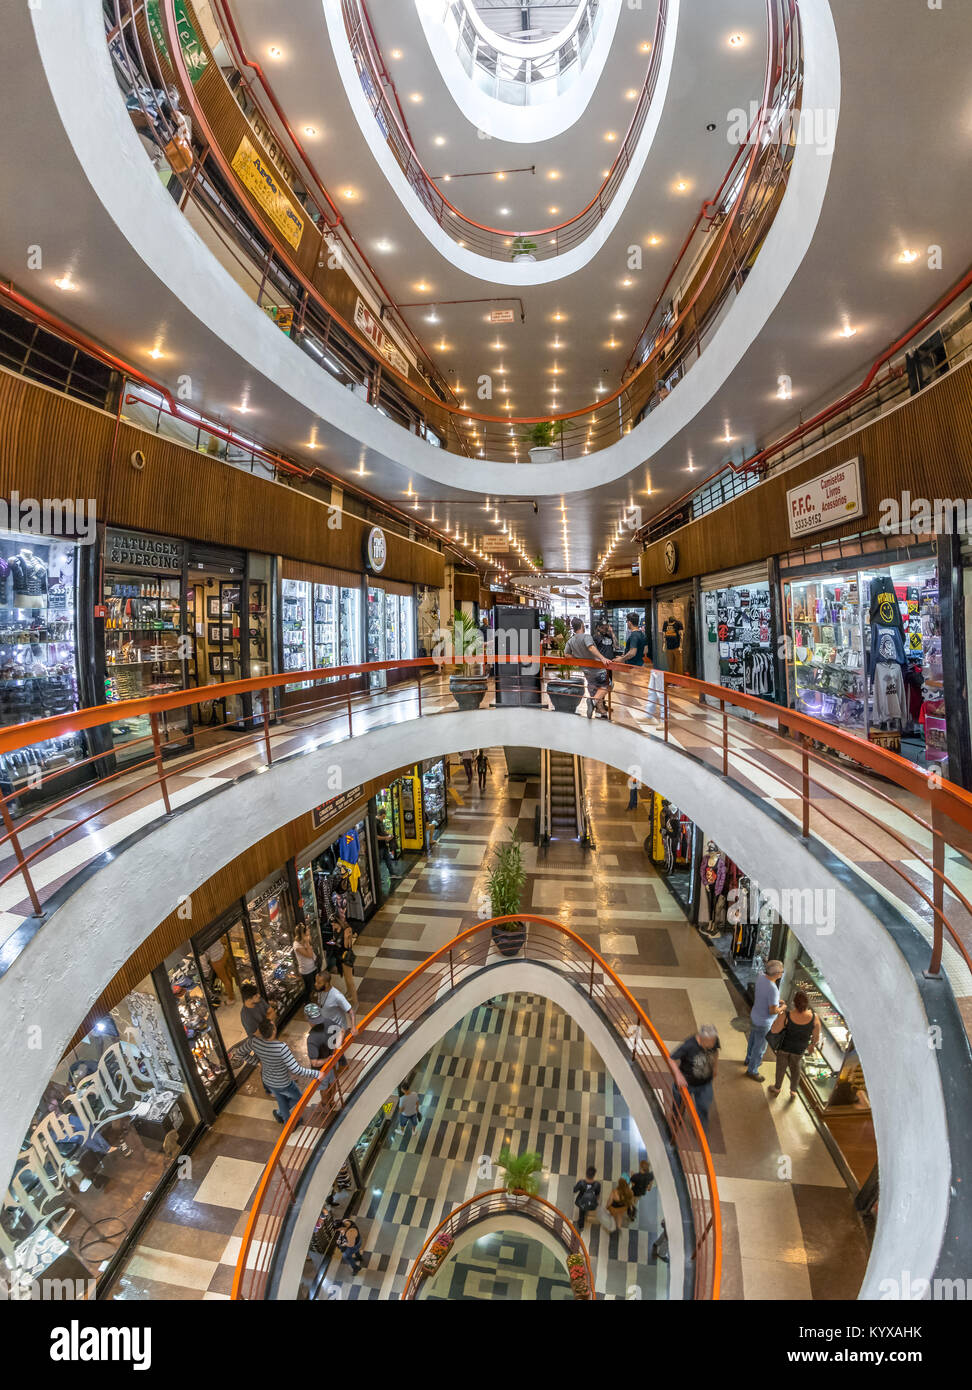 Galeria do Rock (Rock Gallery) Shopping Mall in Dowtown Sao Paulo - Sao  Paulo, Brazil Stock Photo - Alamy